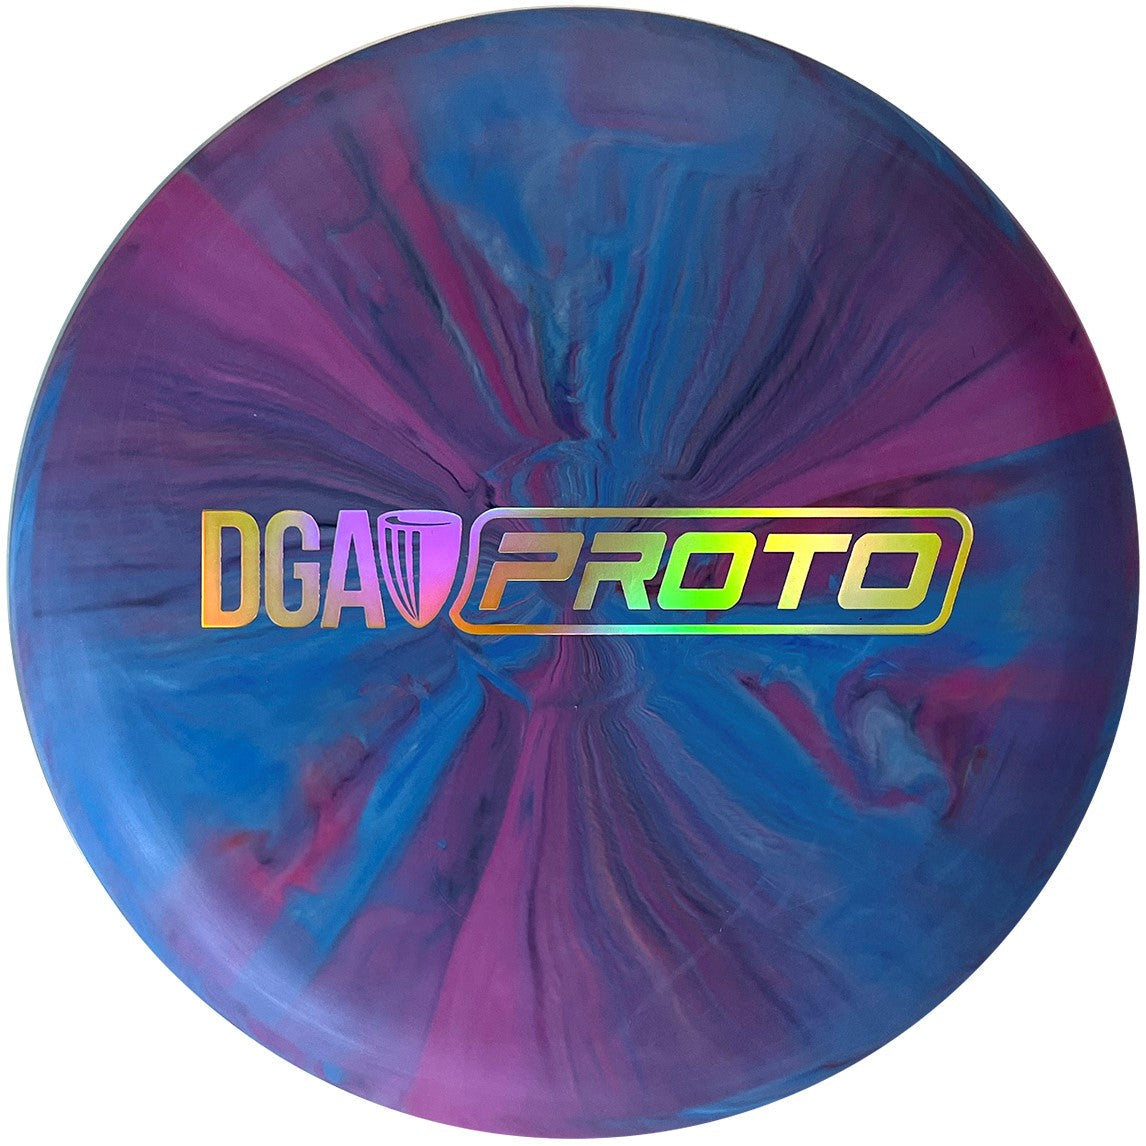 DGA Limited Edition Proto Swirl Base Blend Surf Putter Golf Disc